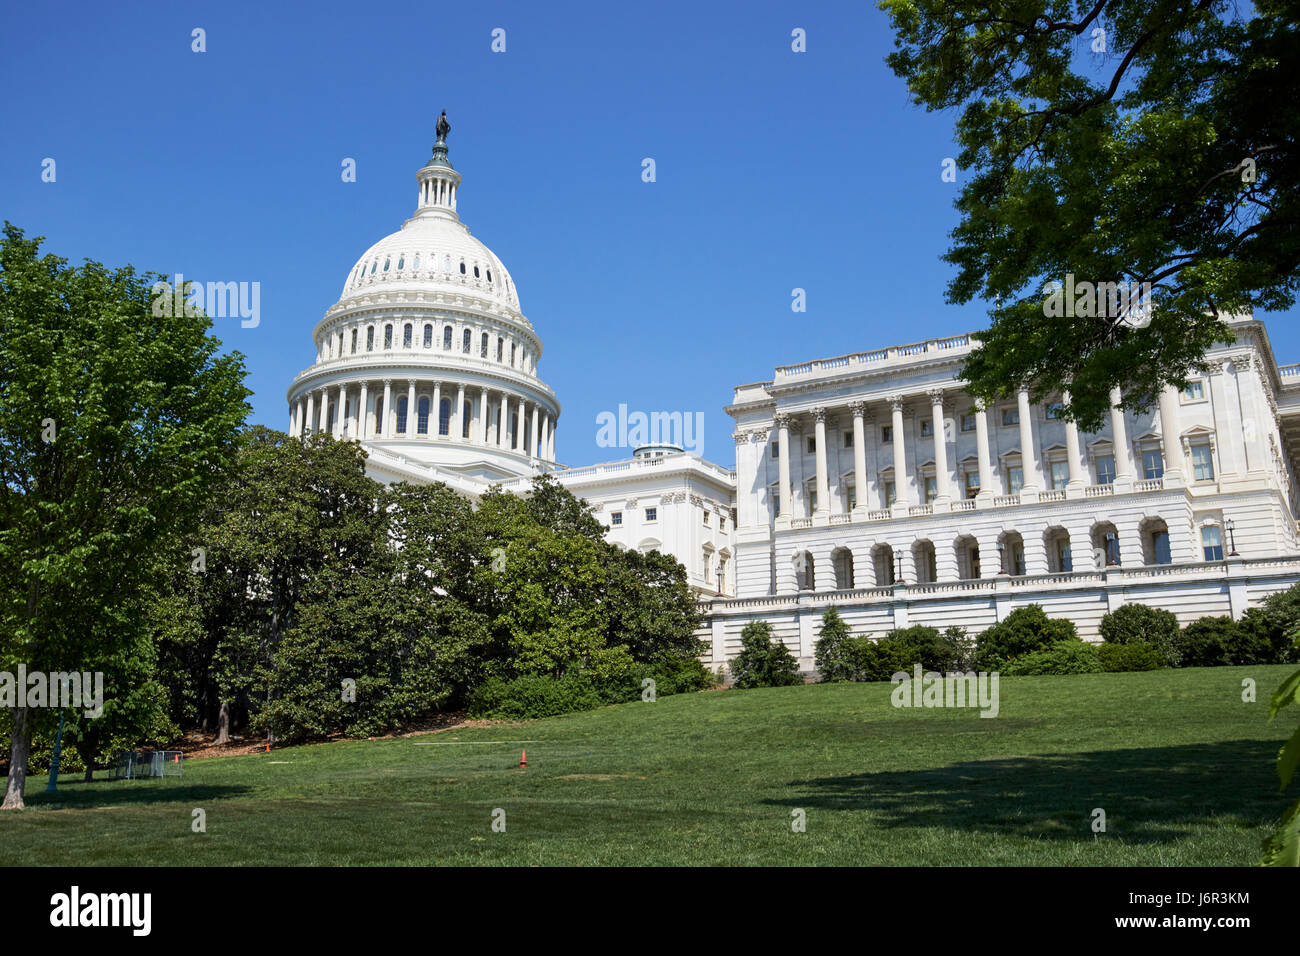 United States Capitol building and house of representatives chamber buildnig Washington DC USA Stock Photo